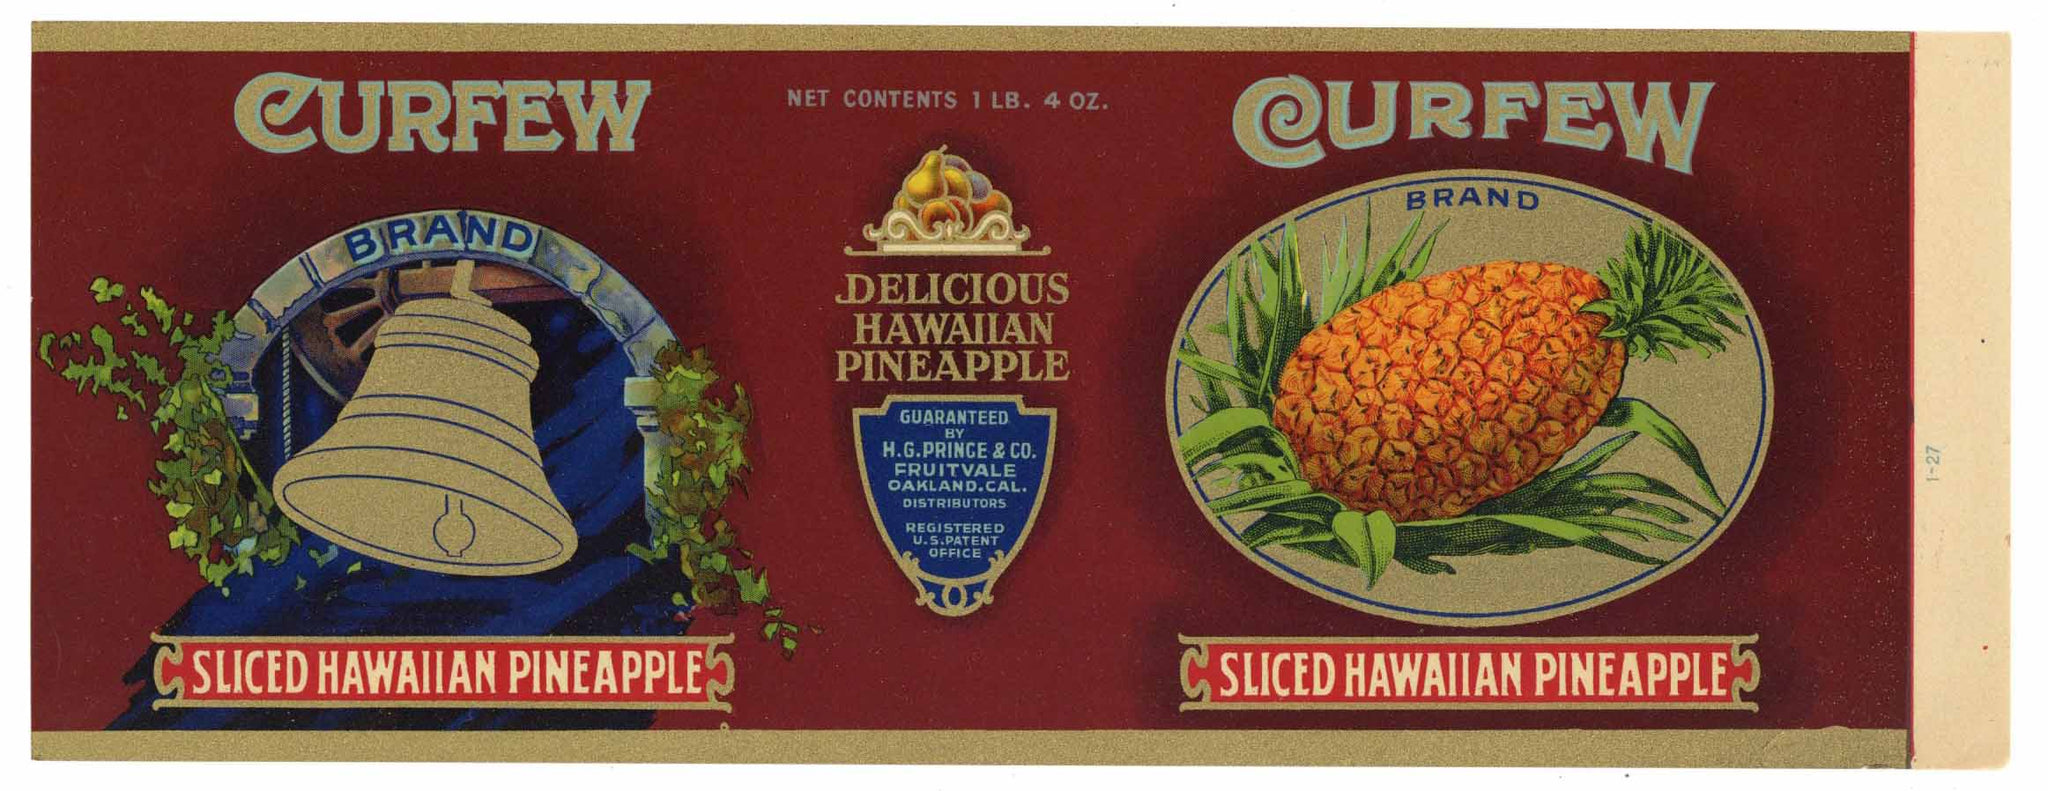 Curfew Brand Vintage Oakland Fruitvale Pineapple Can Label